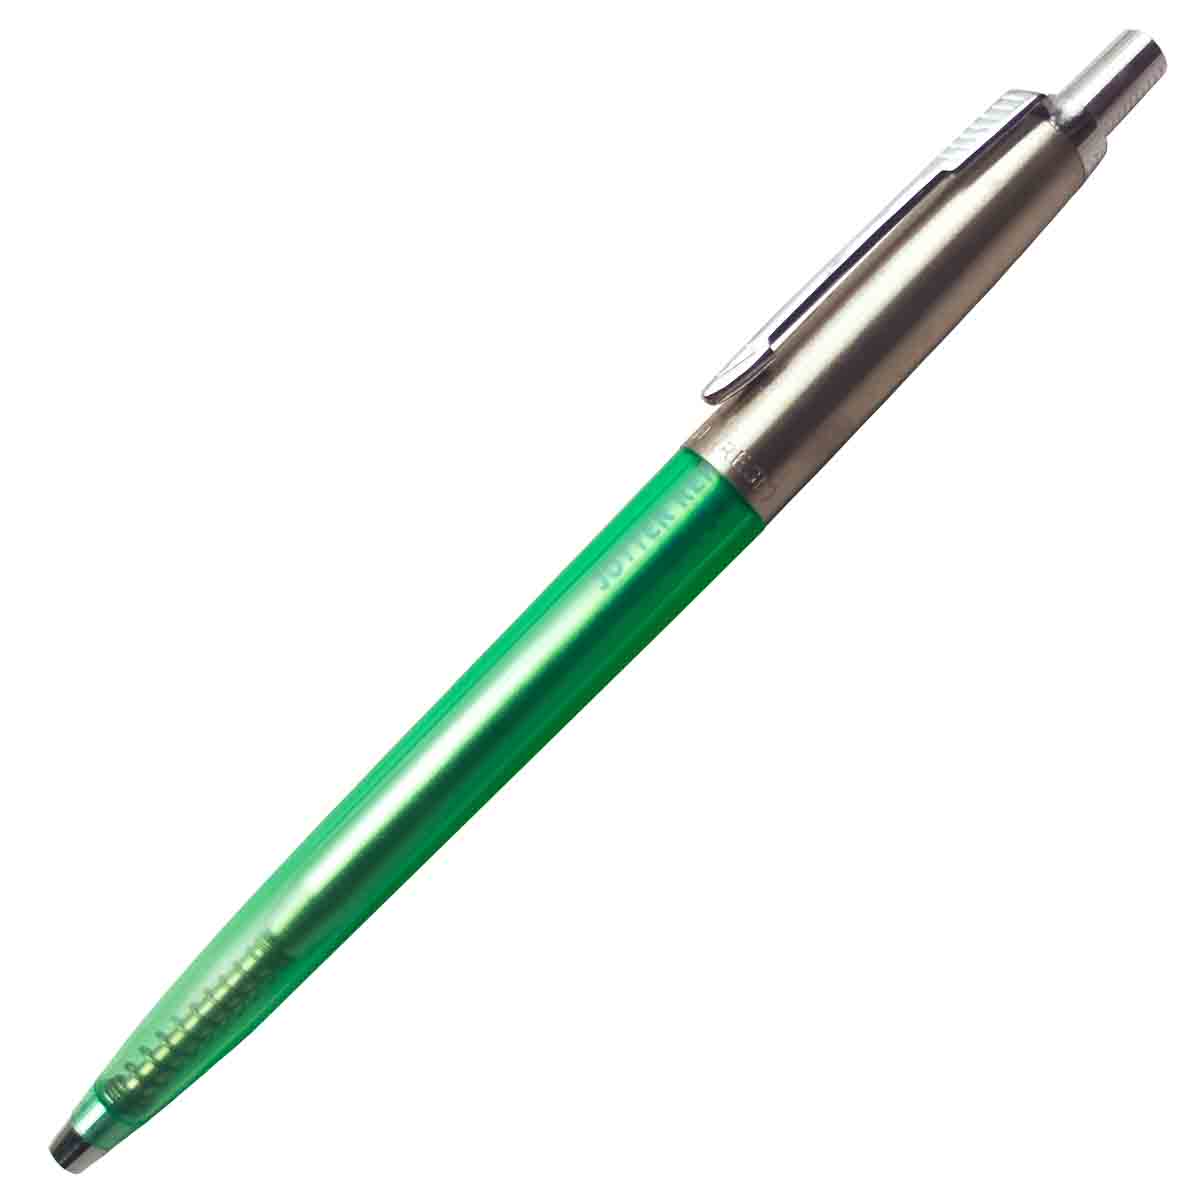 Wilson Light Green Transparent Color Body with Medium Tip Retractable Ball Pen SKU 19019